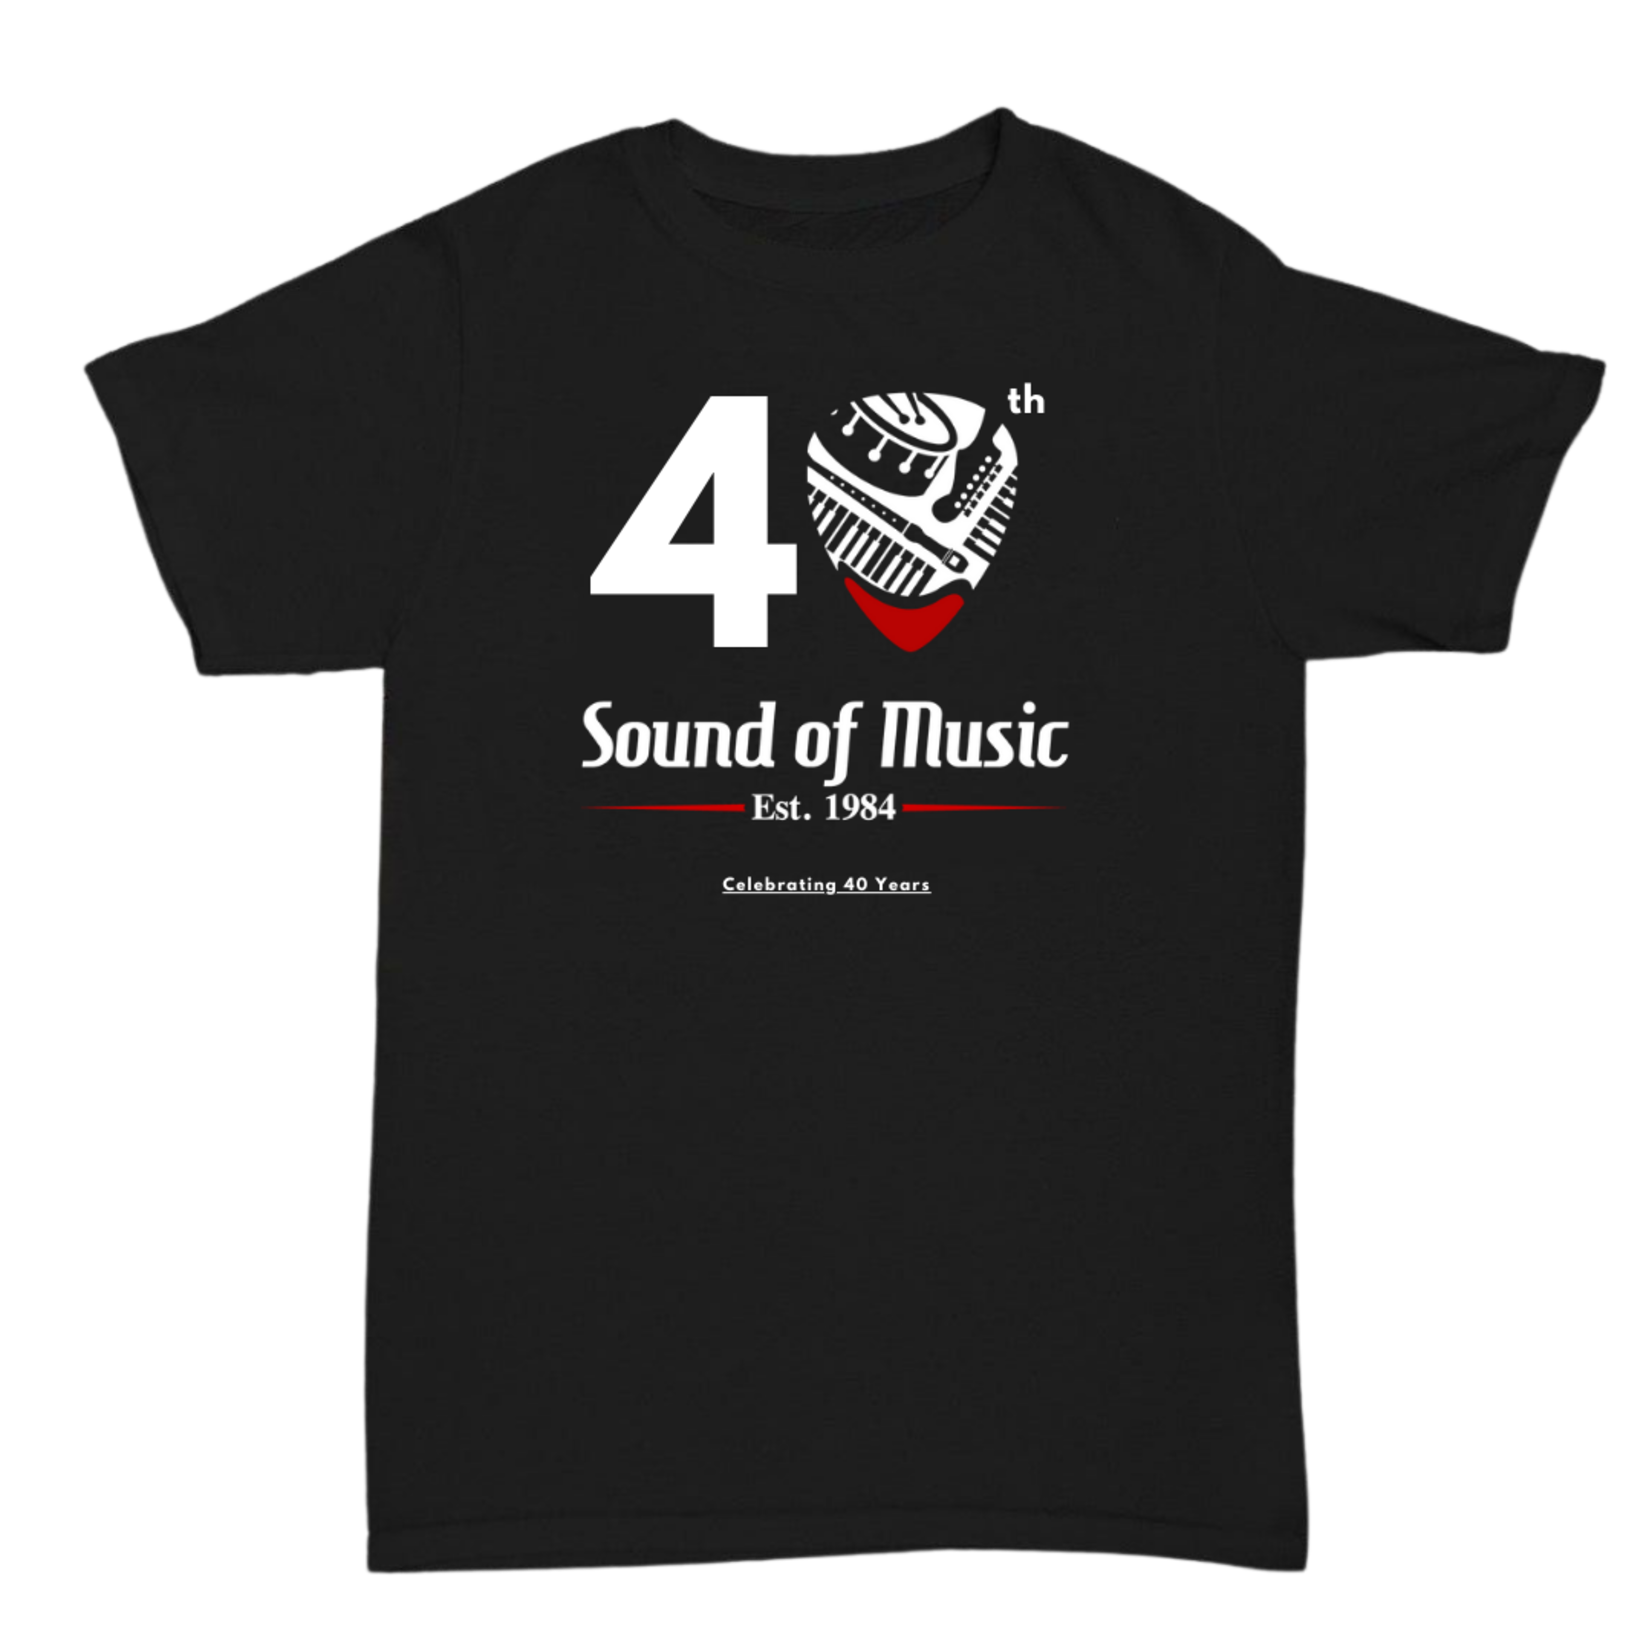 Sound of Music 40th Anniversary Shirt - Large